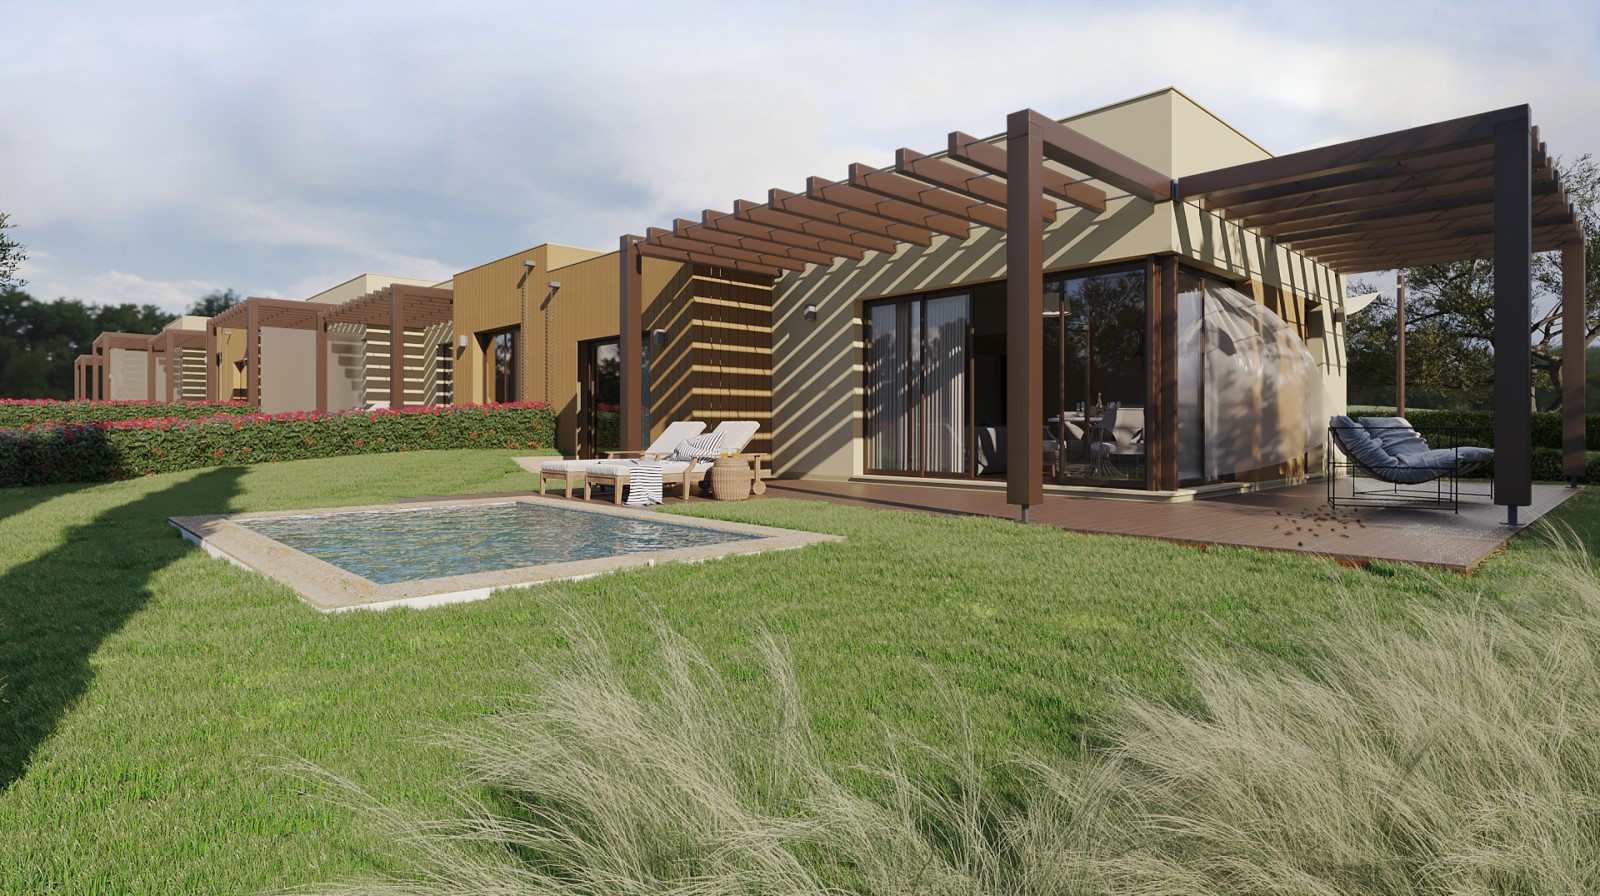 2 bedroom semi-detached villa with swimming pool for sale in Golf resort, Algarve_218821